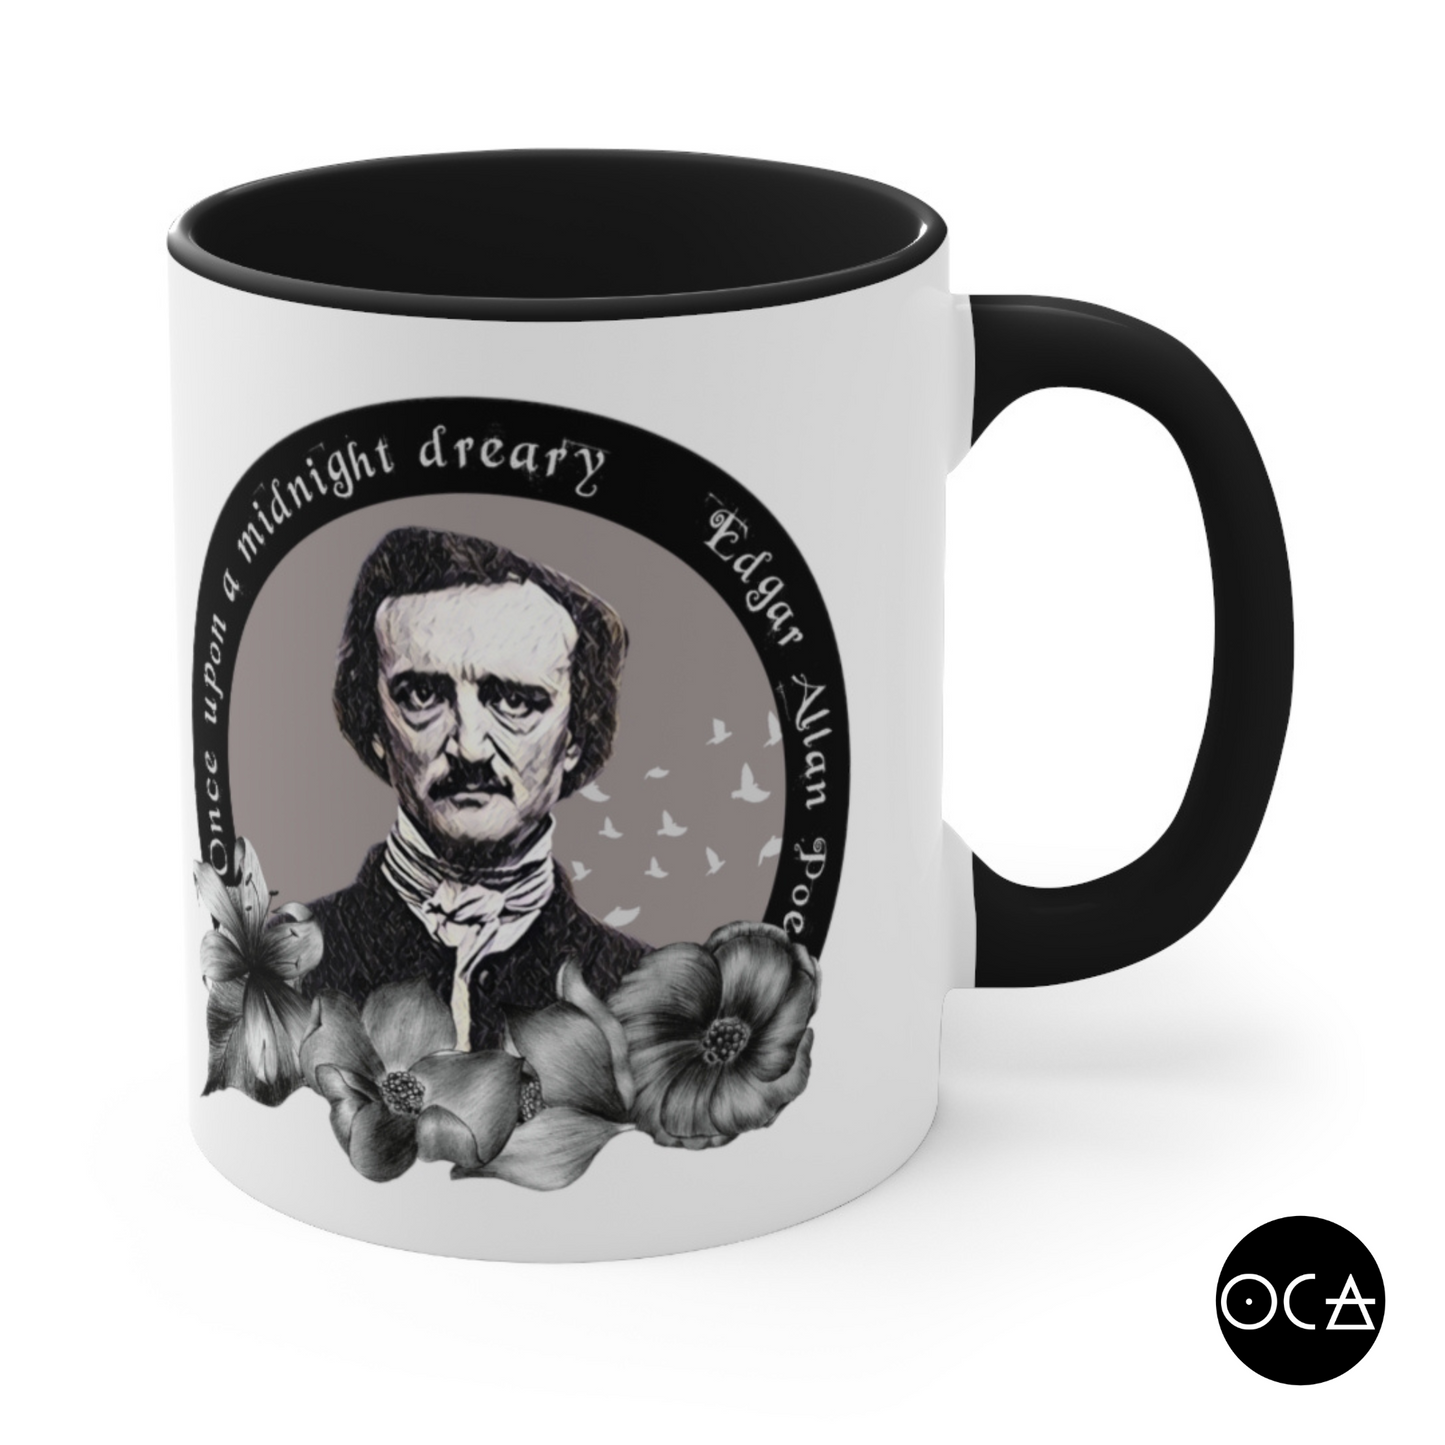 Edgar Allan Poe Mug (Doublesided)